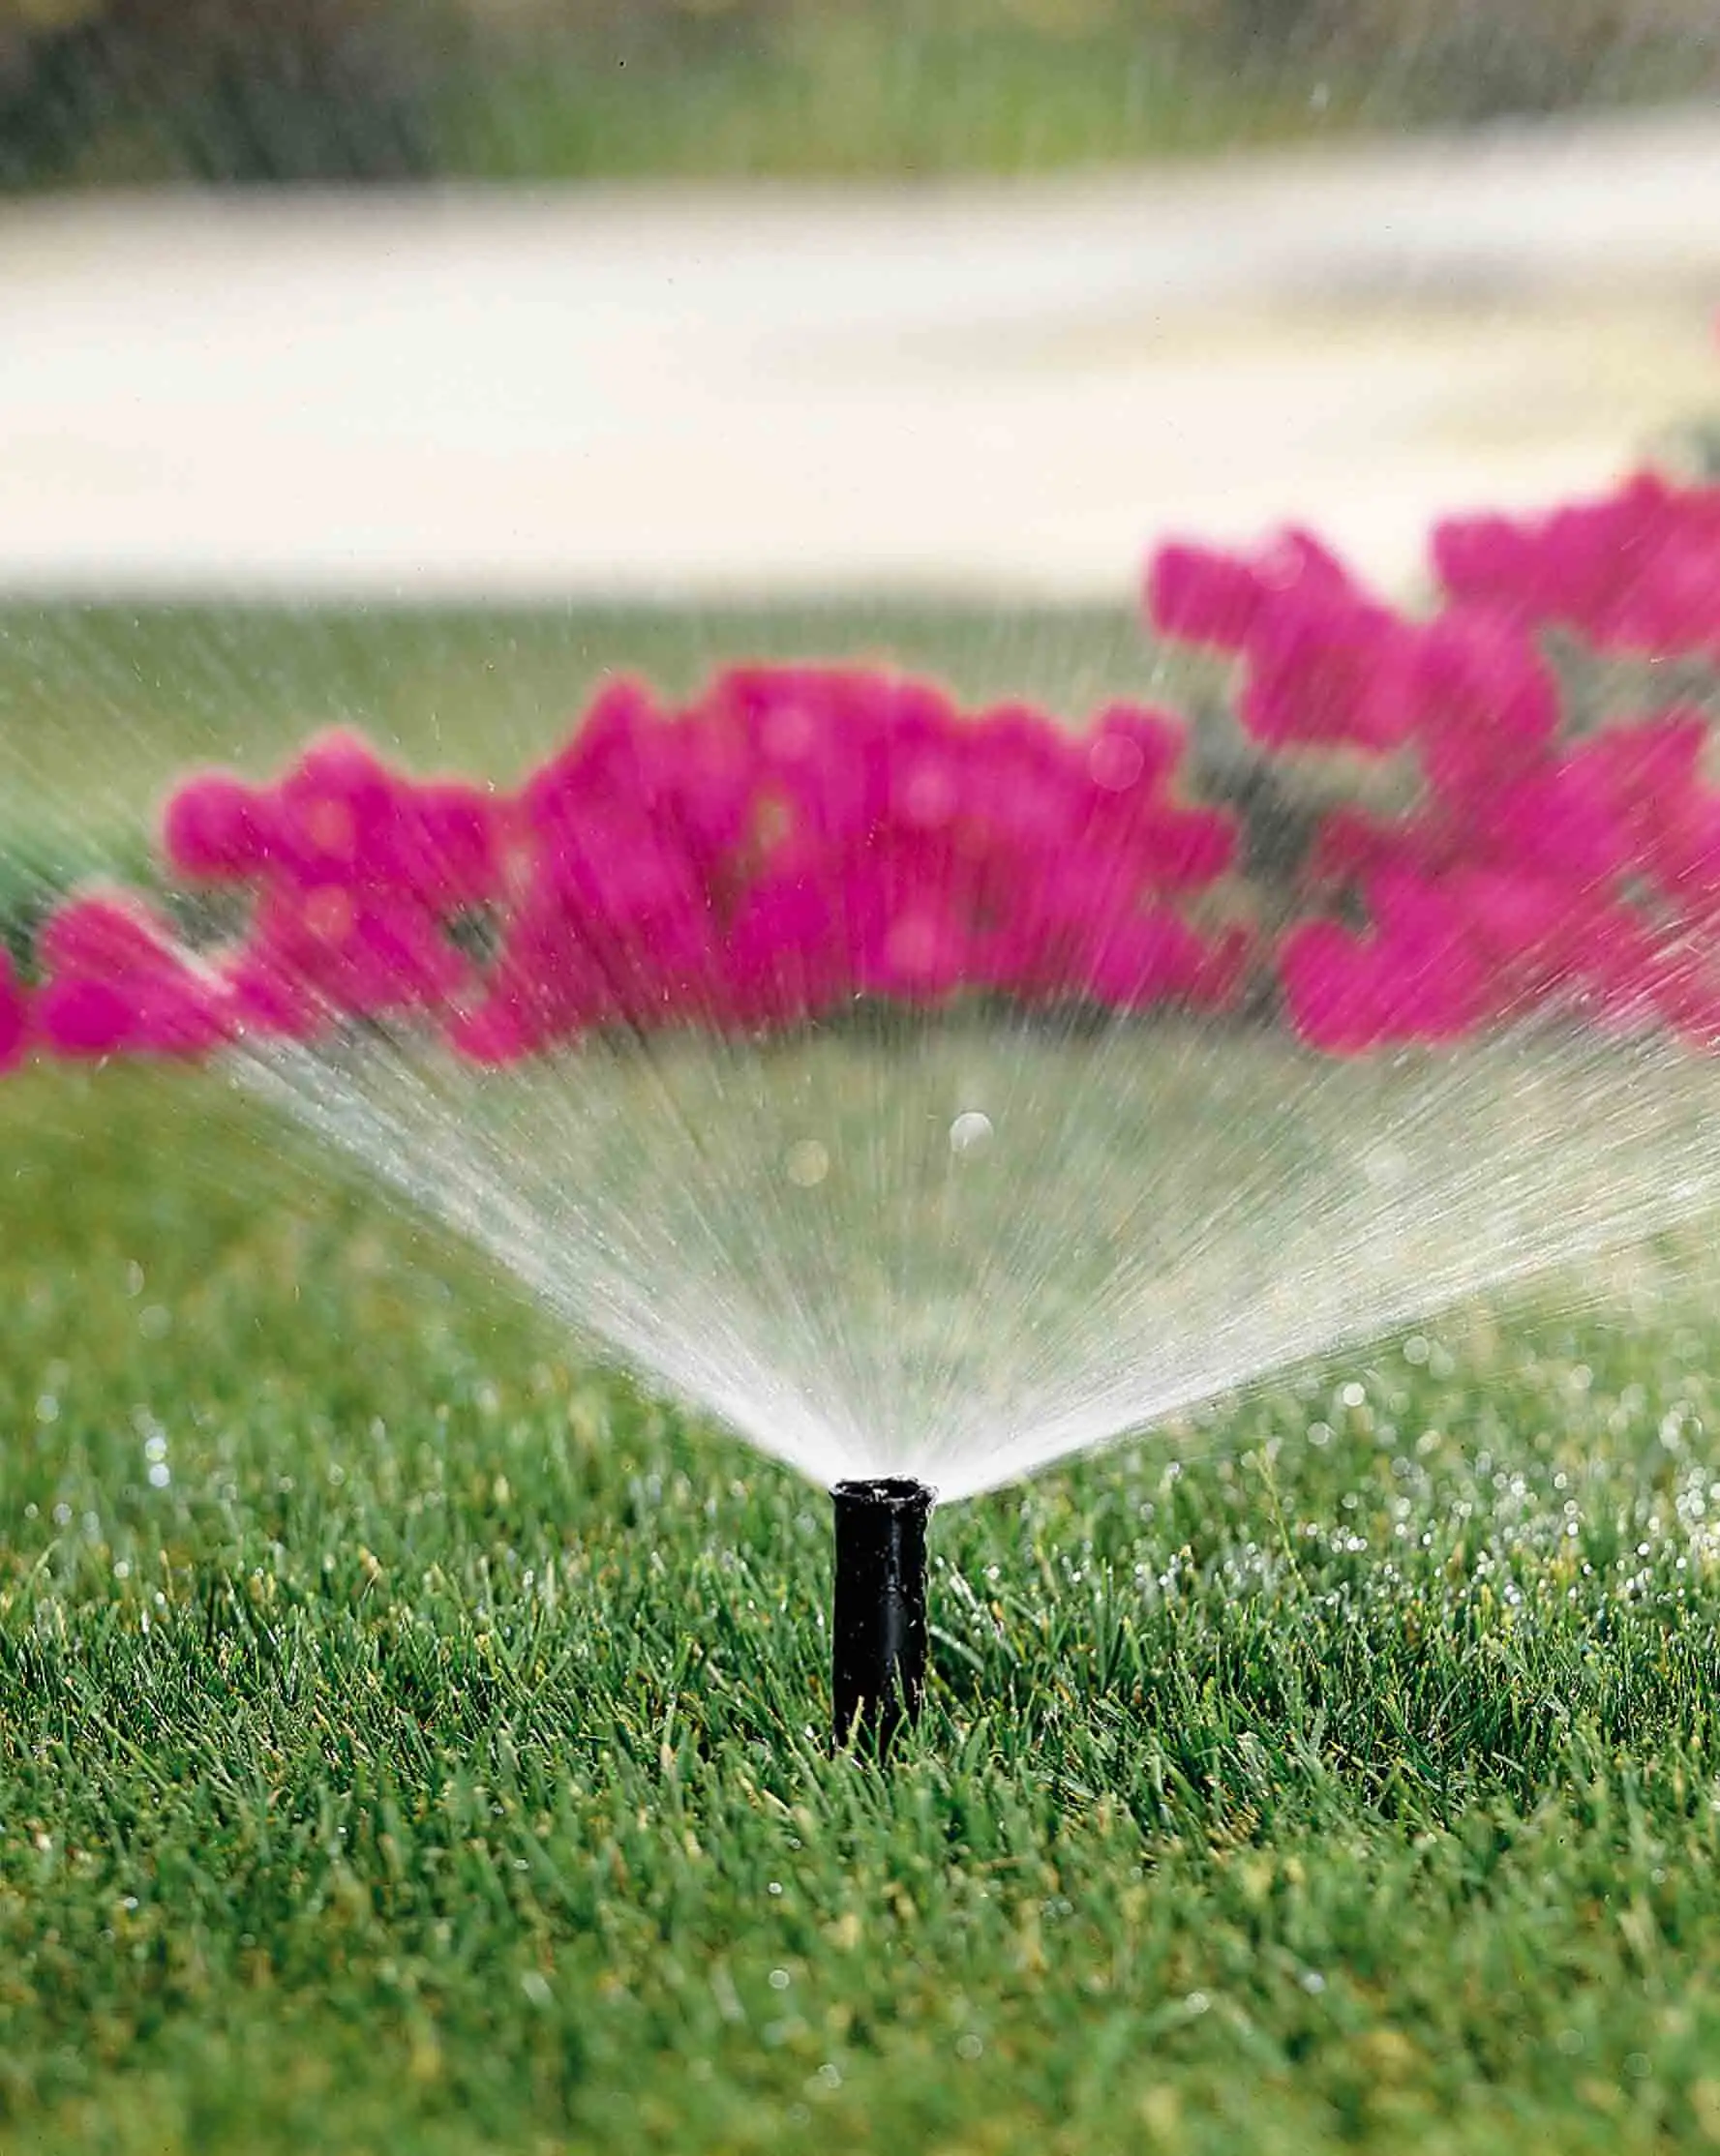 Types Of Lawn Sprinklers,Underground 360 Garden Agricultural Plastic Garden Watering Pop-Up Irrigation Sprinkler System Head